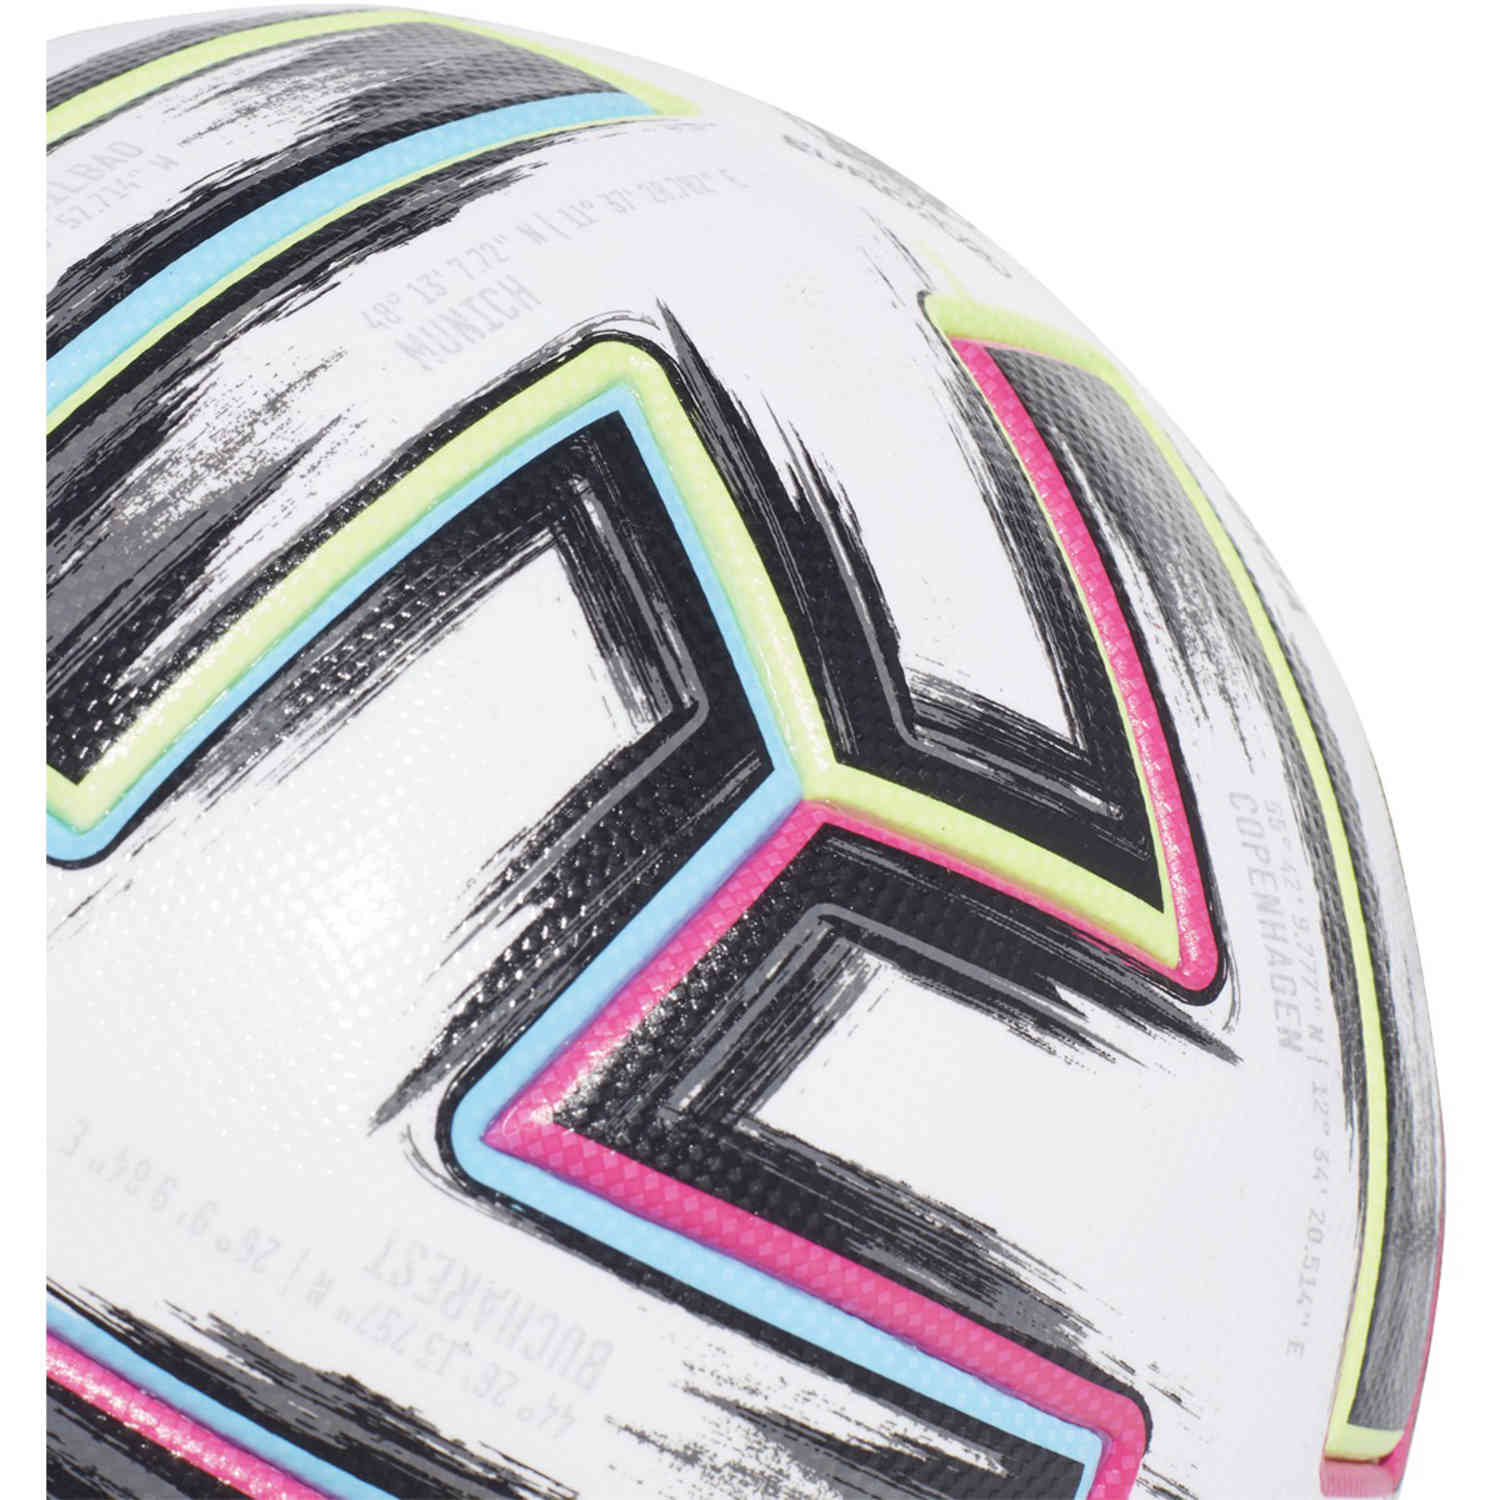 uniforia competition soccer ball